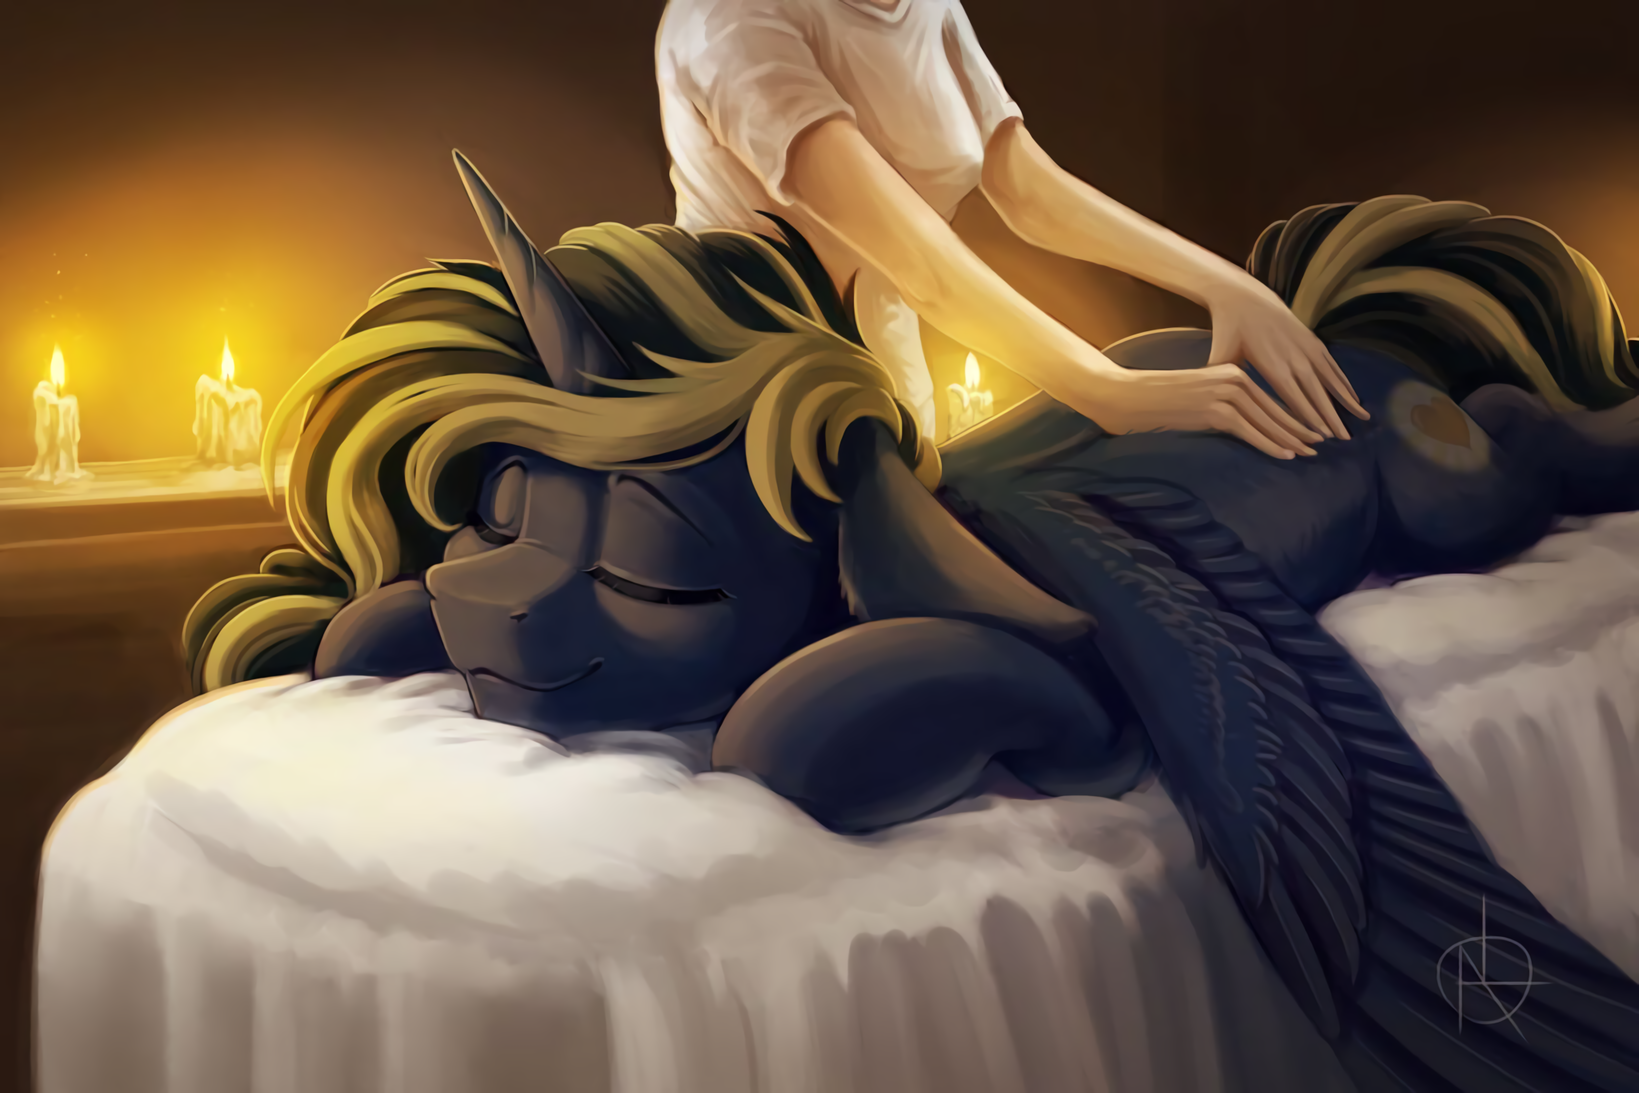 Lower Back Massage - My little pony, Original character, Person, Massage, Klarapl